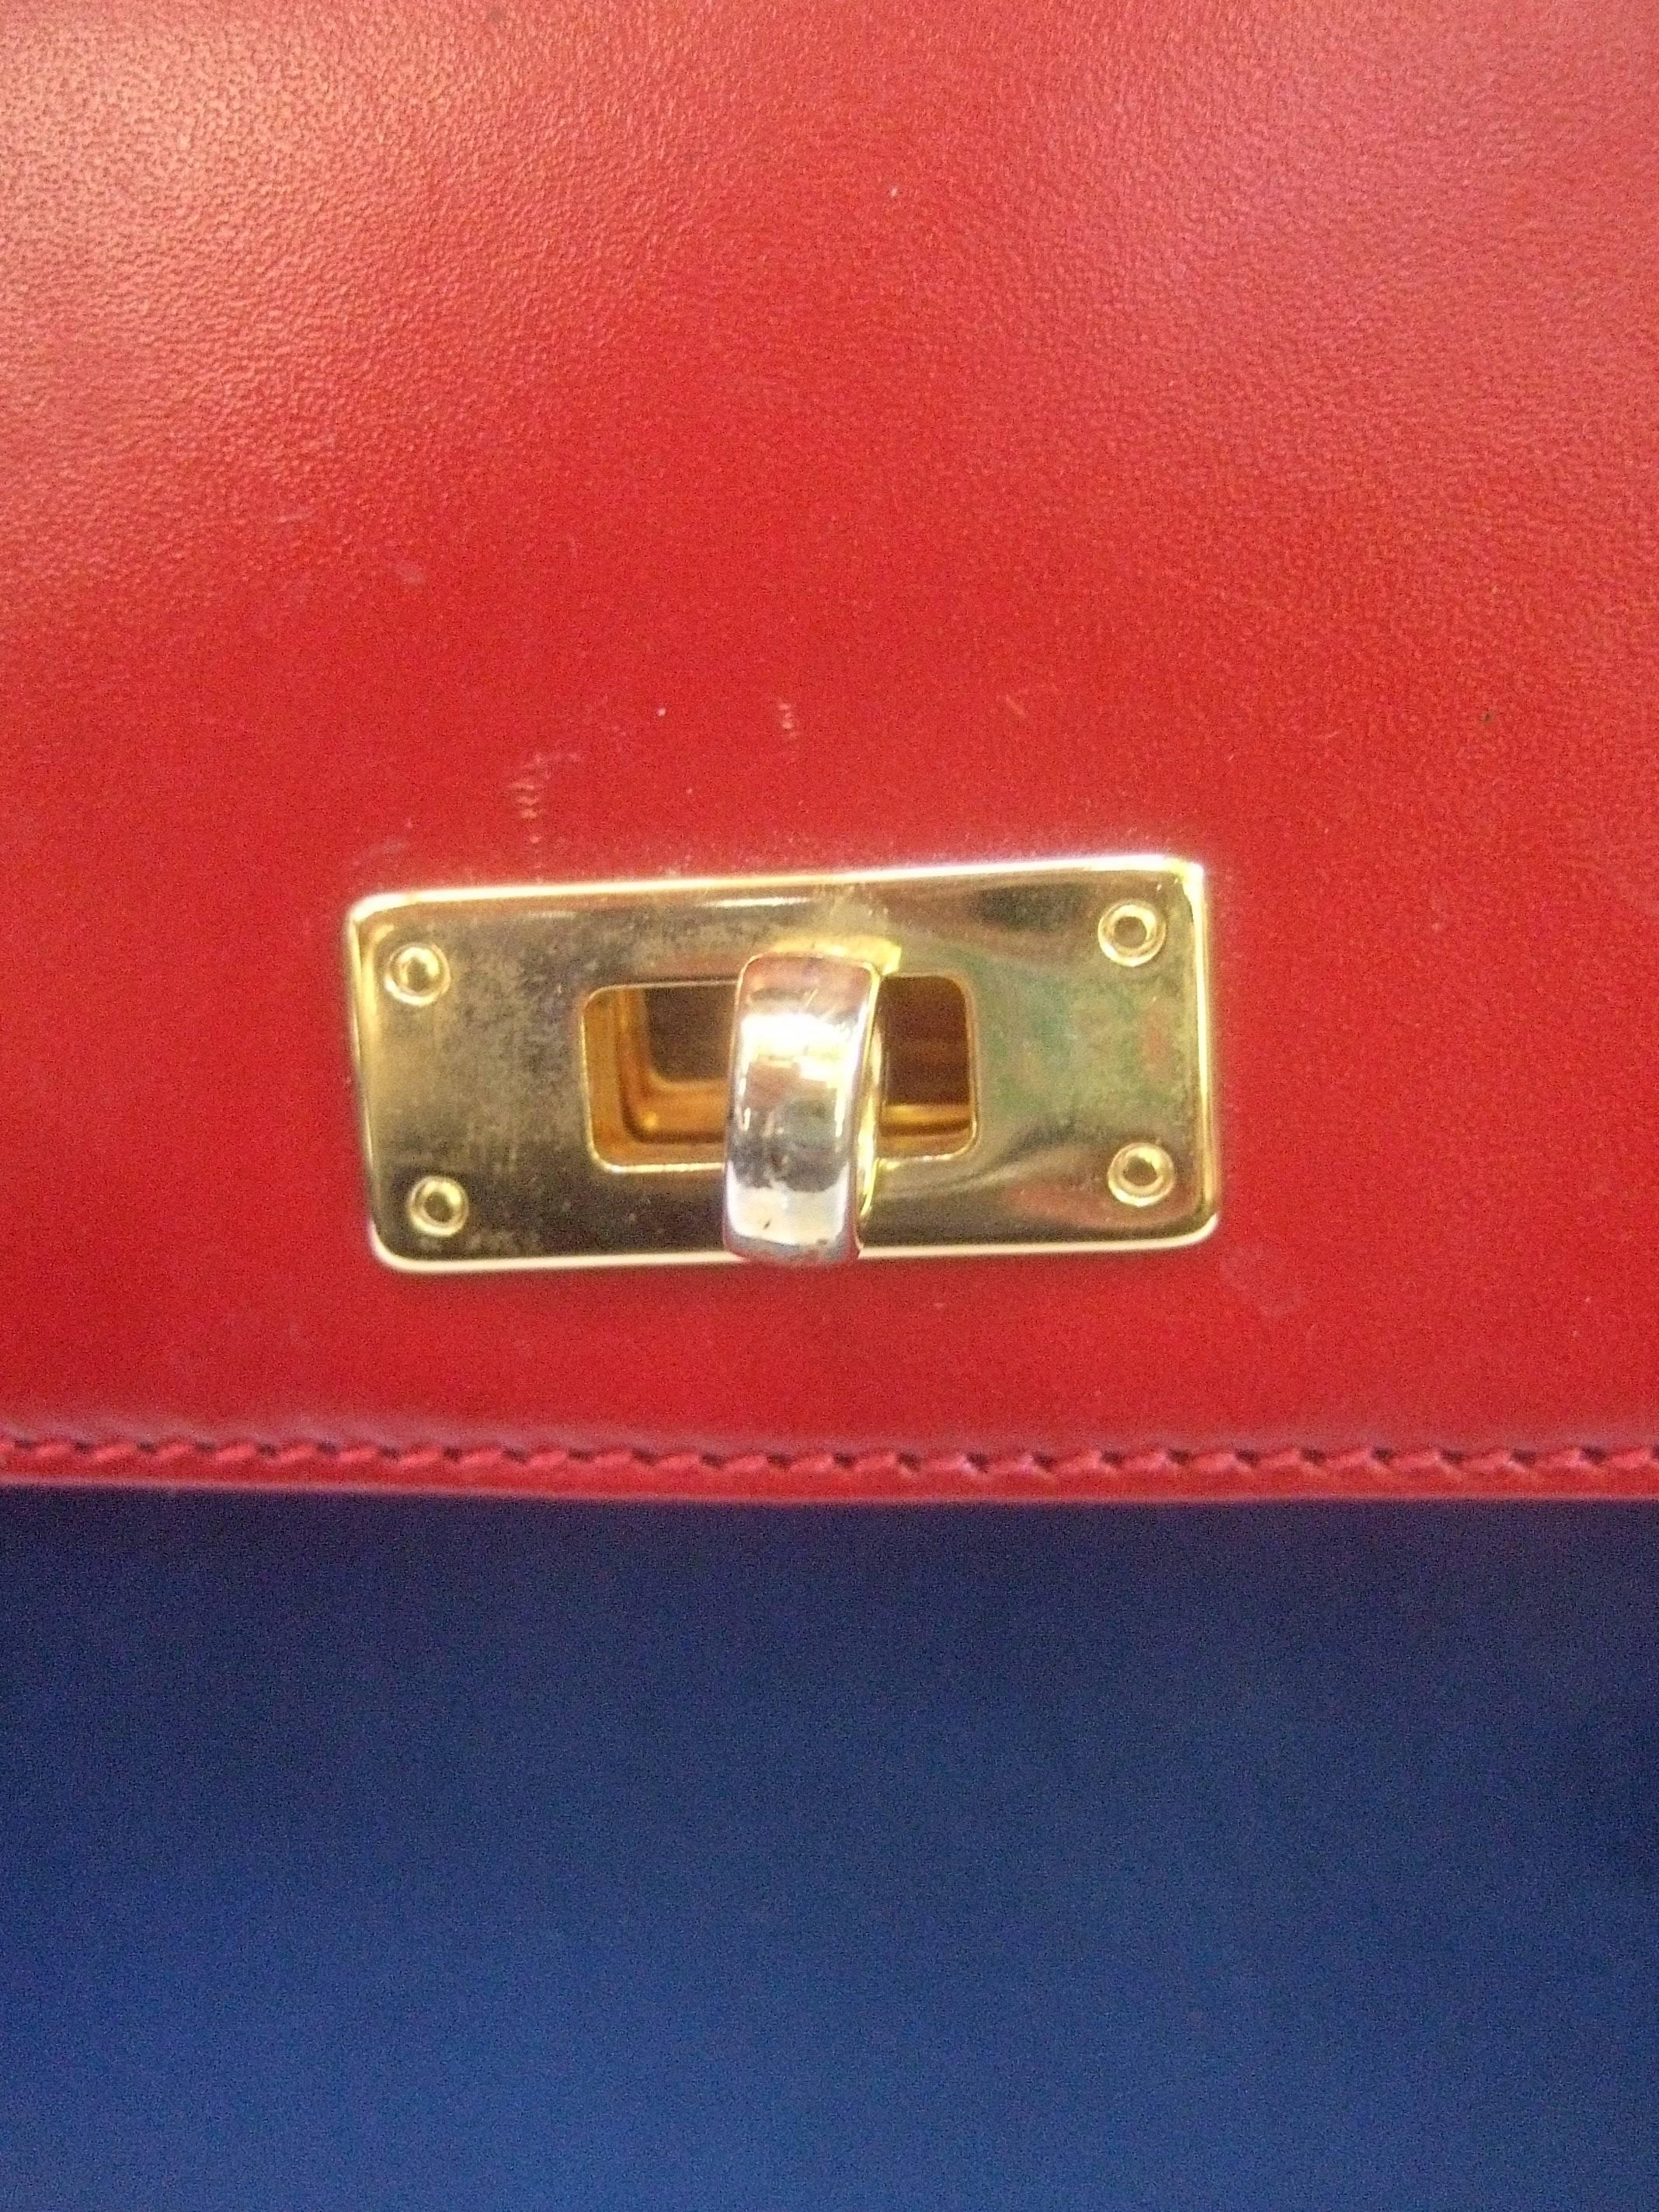 Chic mod Italian leather classic handbag c 1970s 1